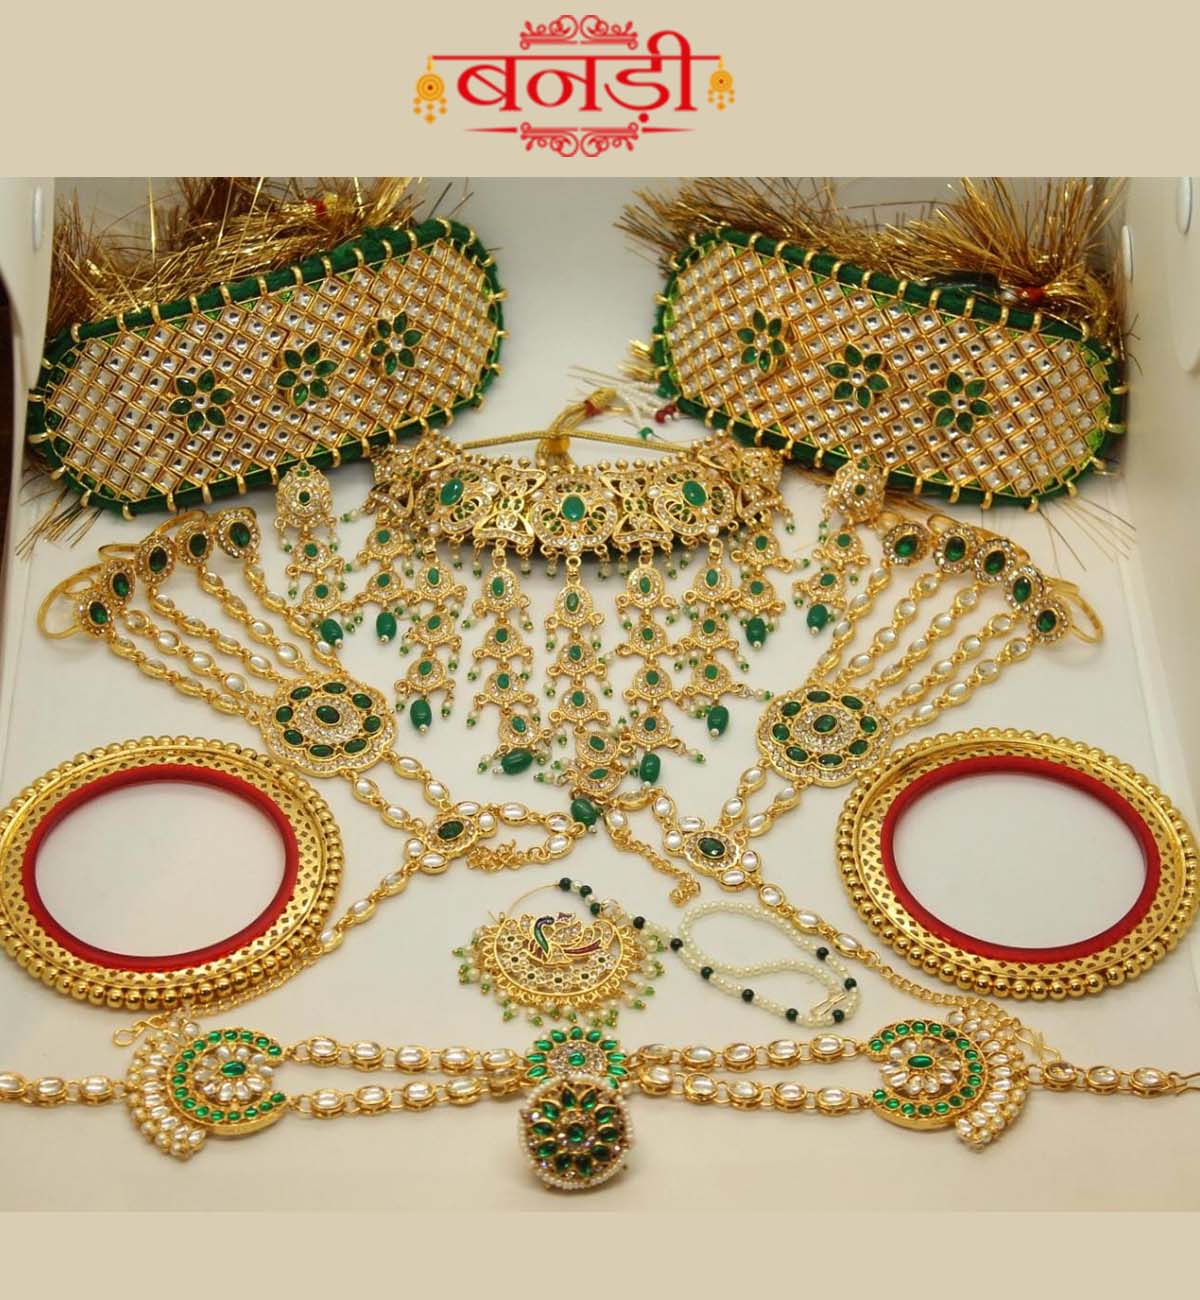 Rajputi Jewelry Set in Green Color 